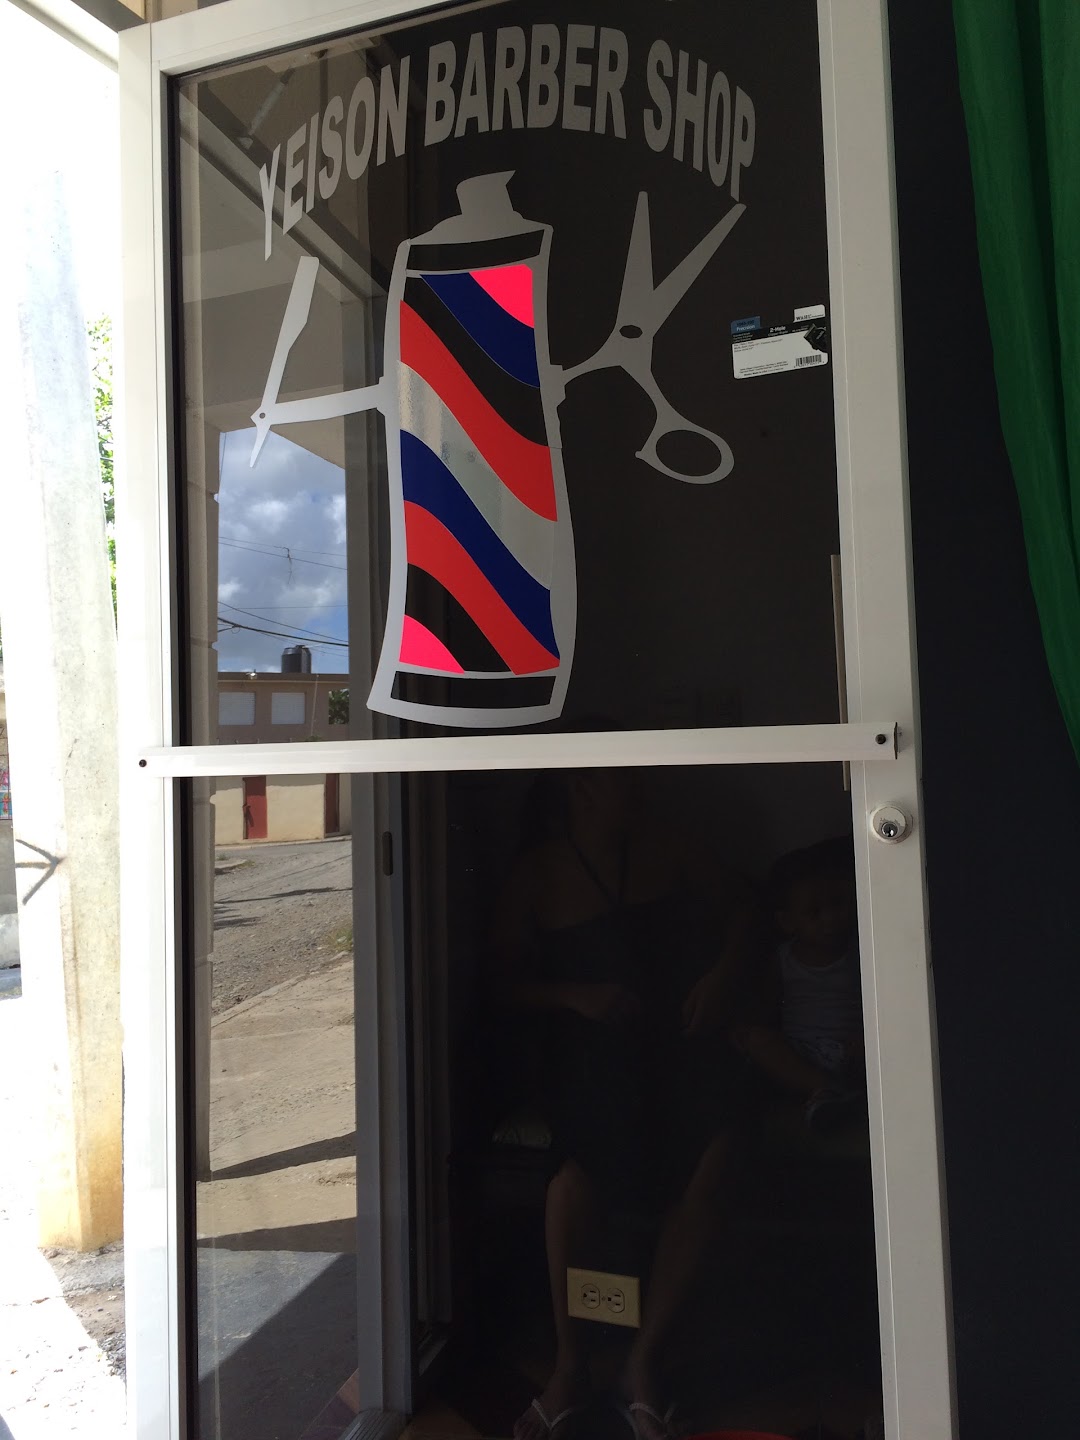 Yeison Barber Shop